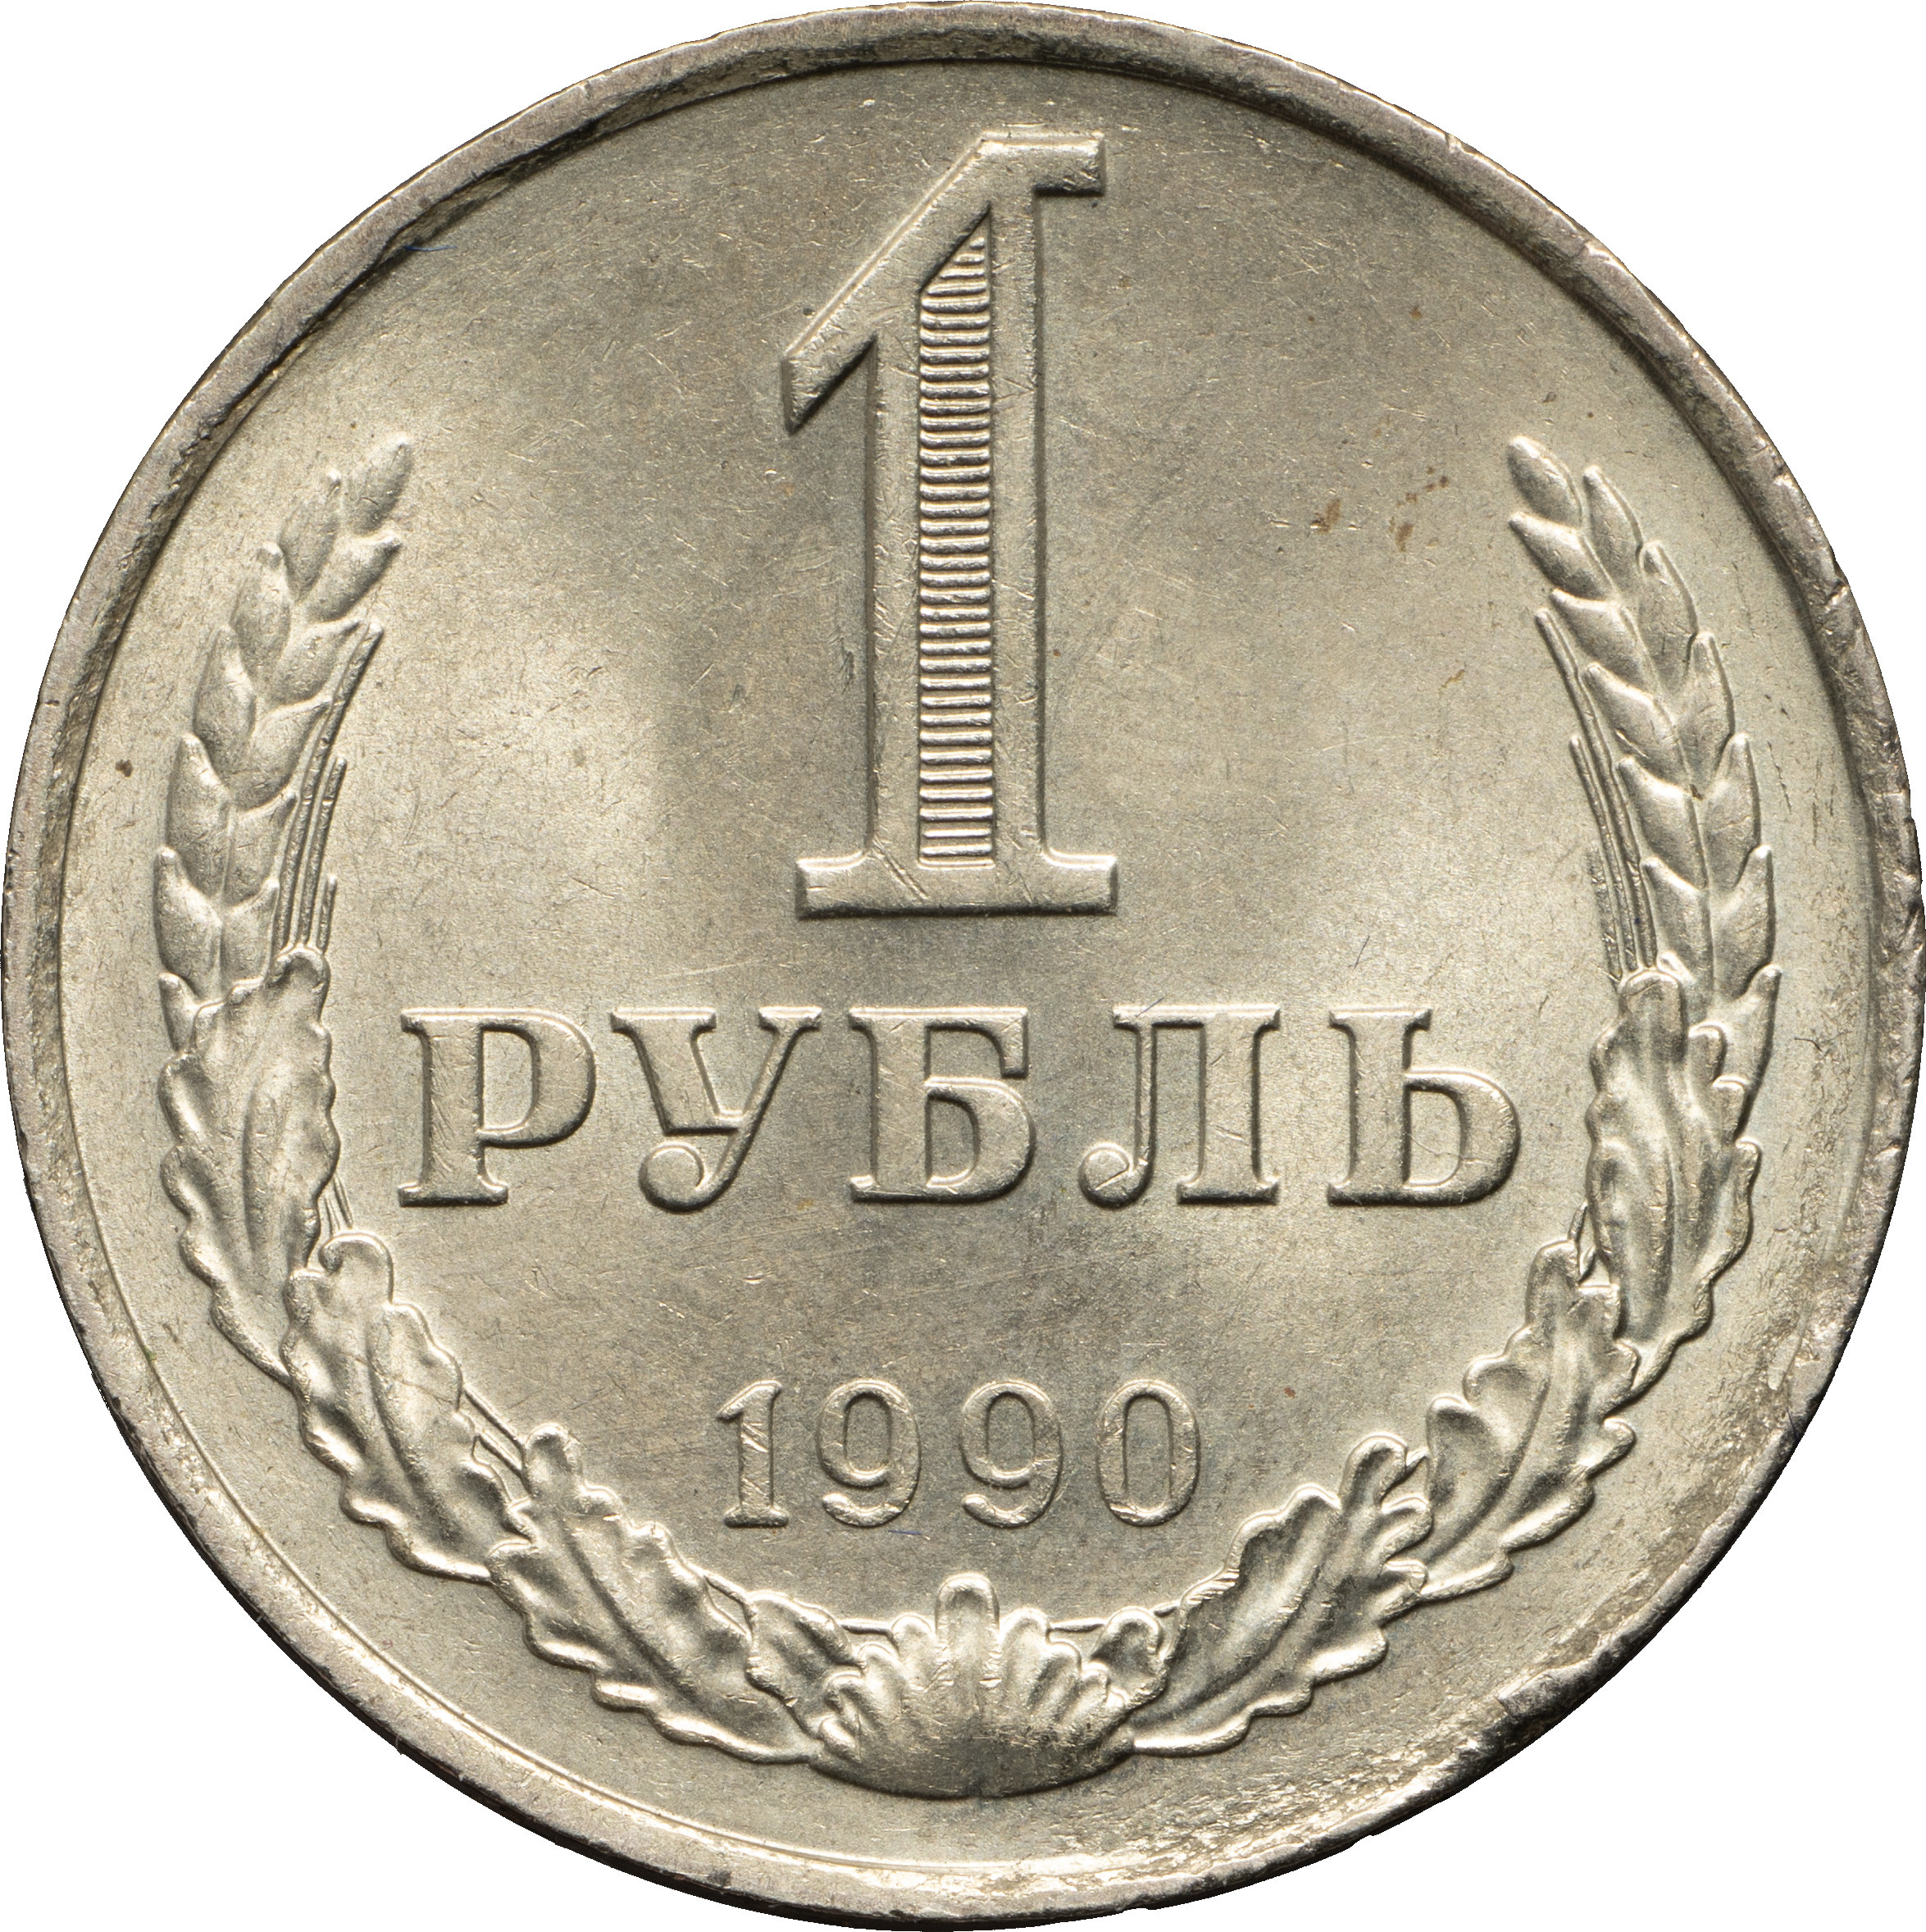 1 рубль 1990 года